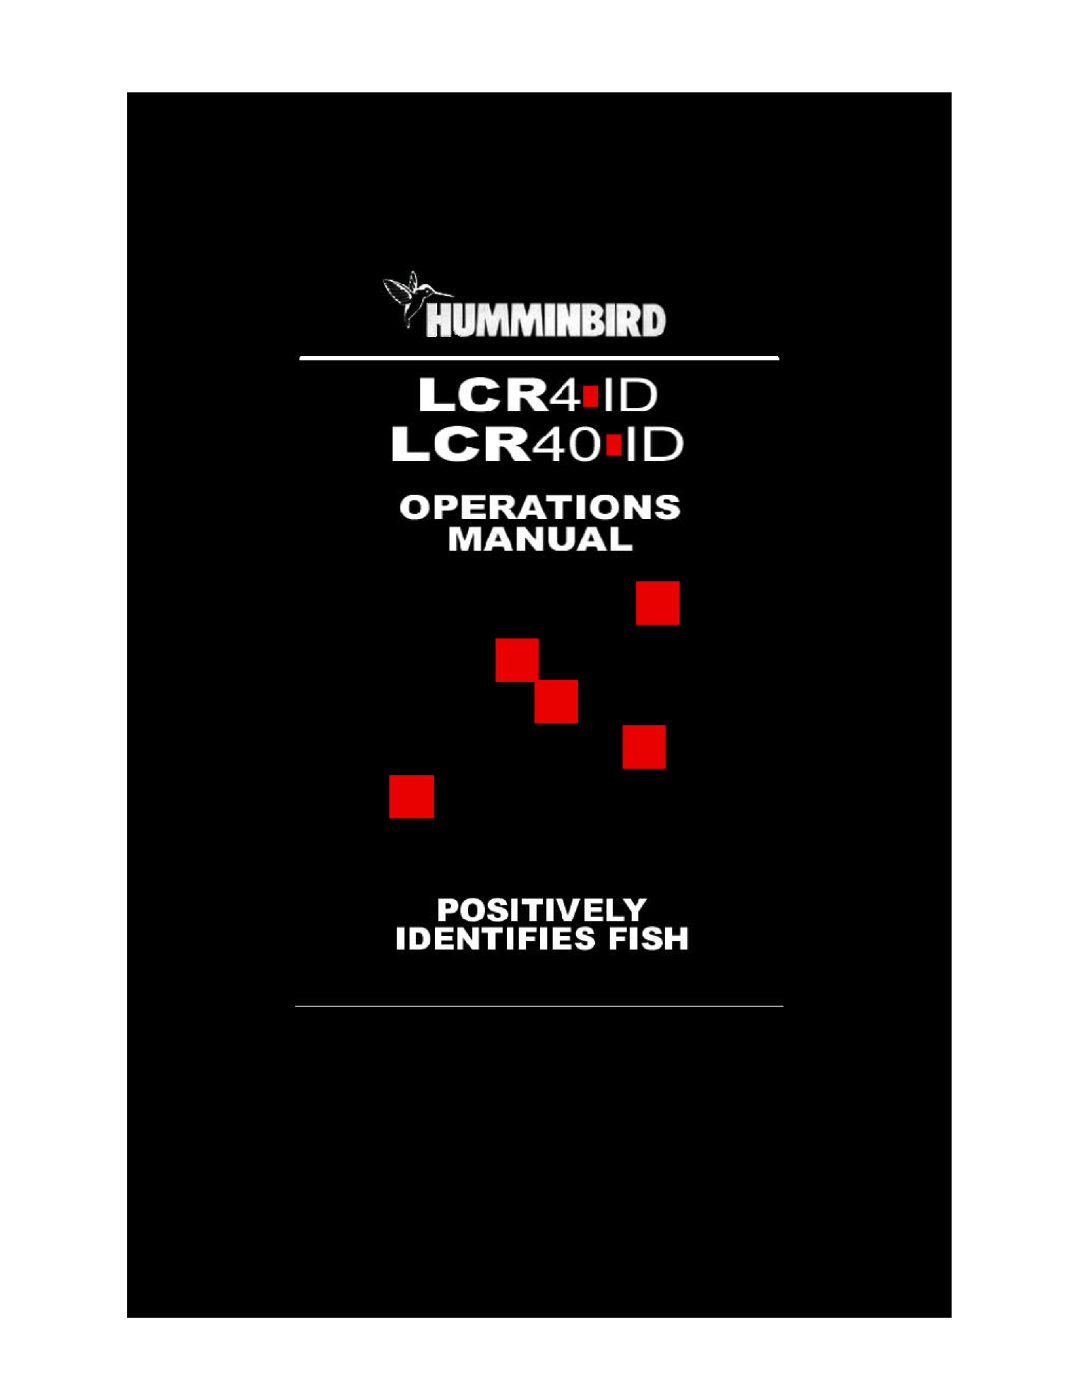 Humminbird LCR4 ID manual 